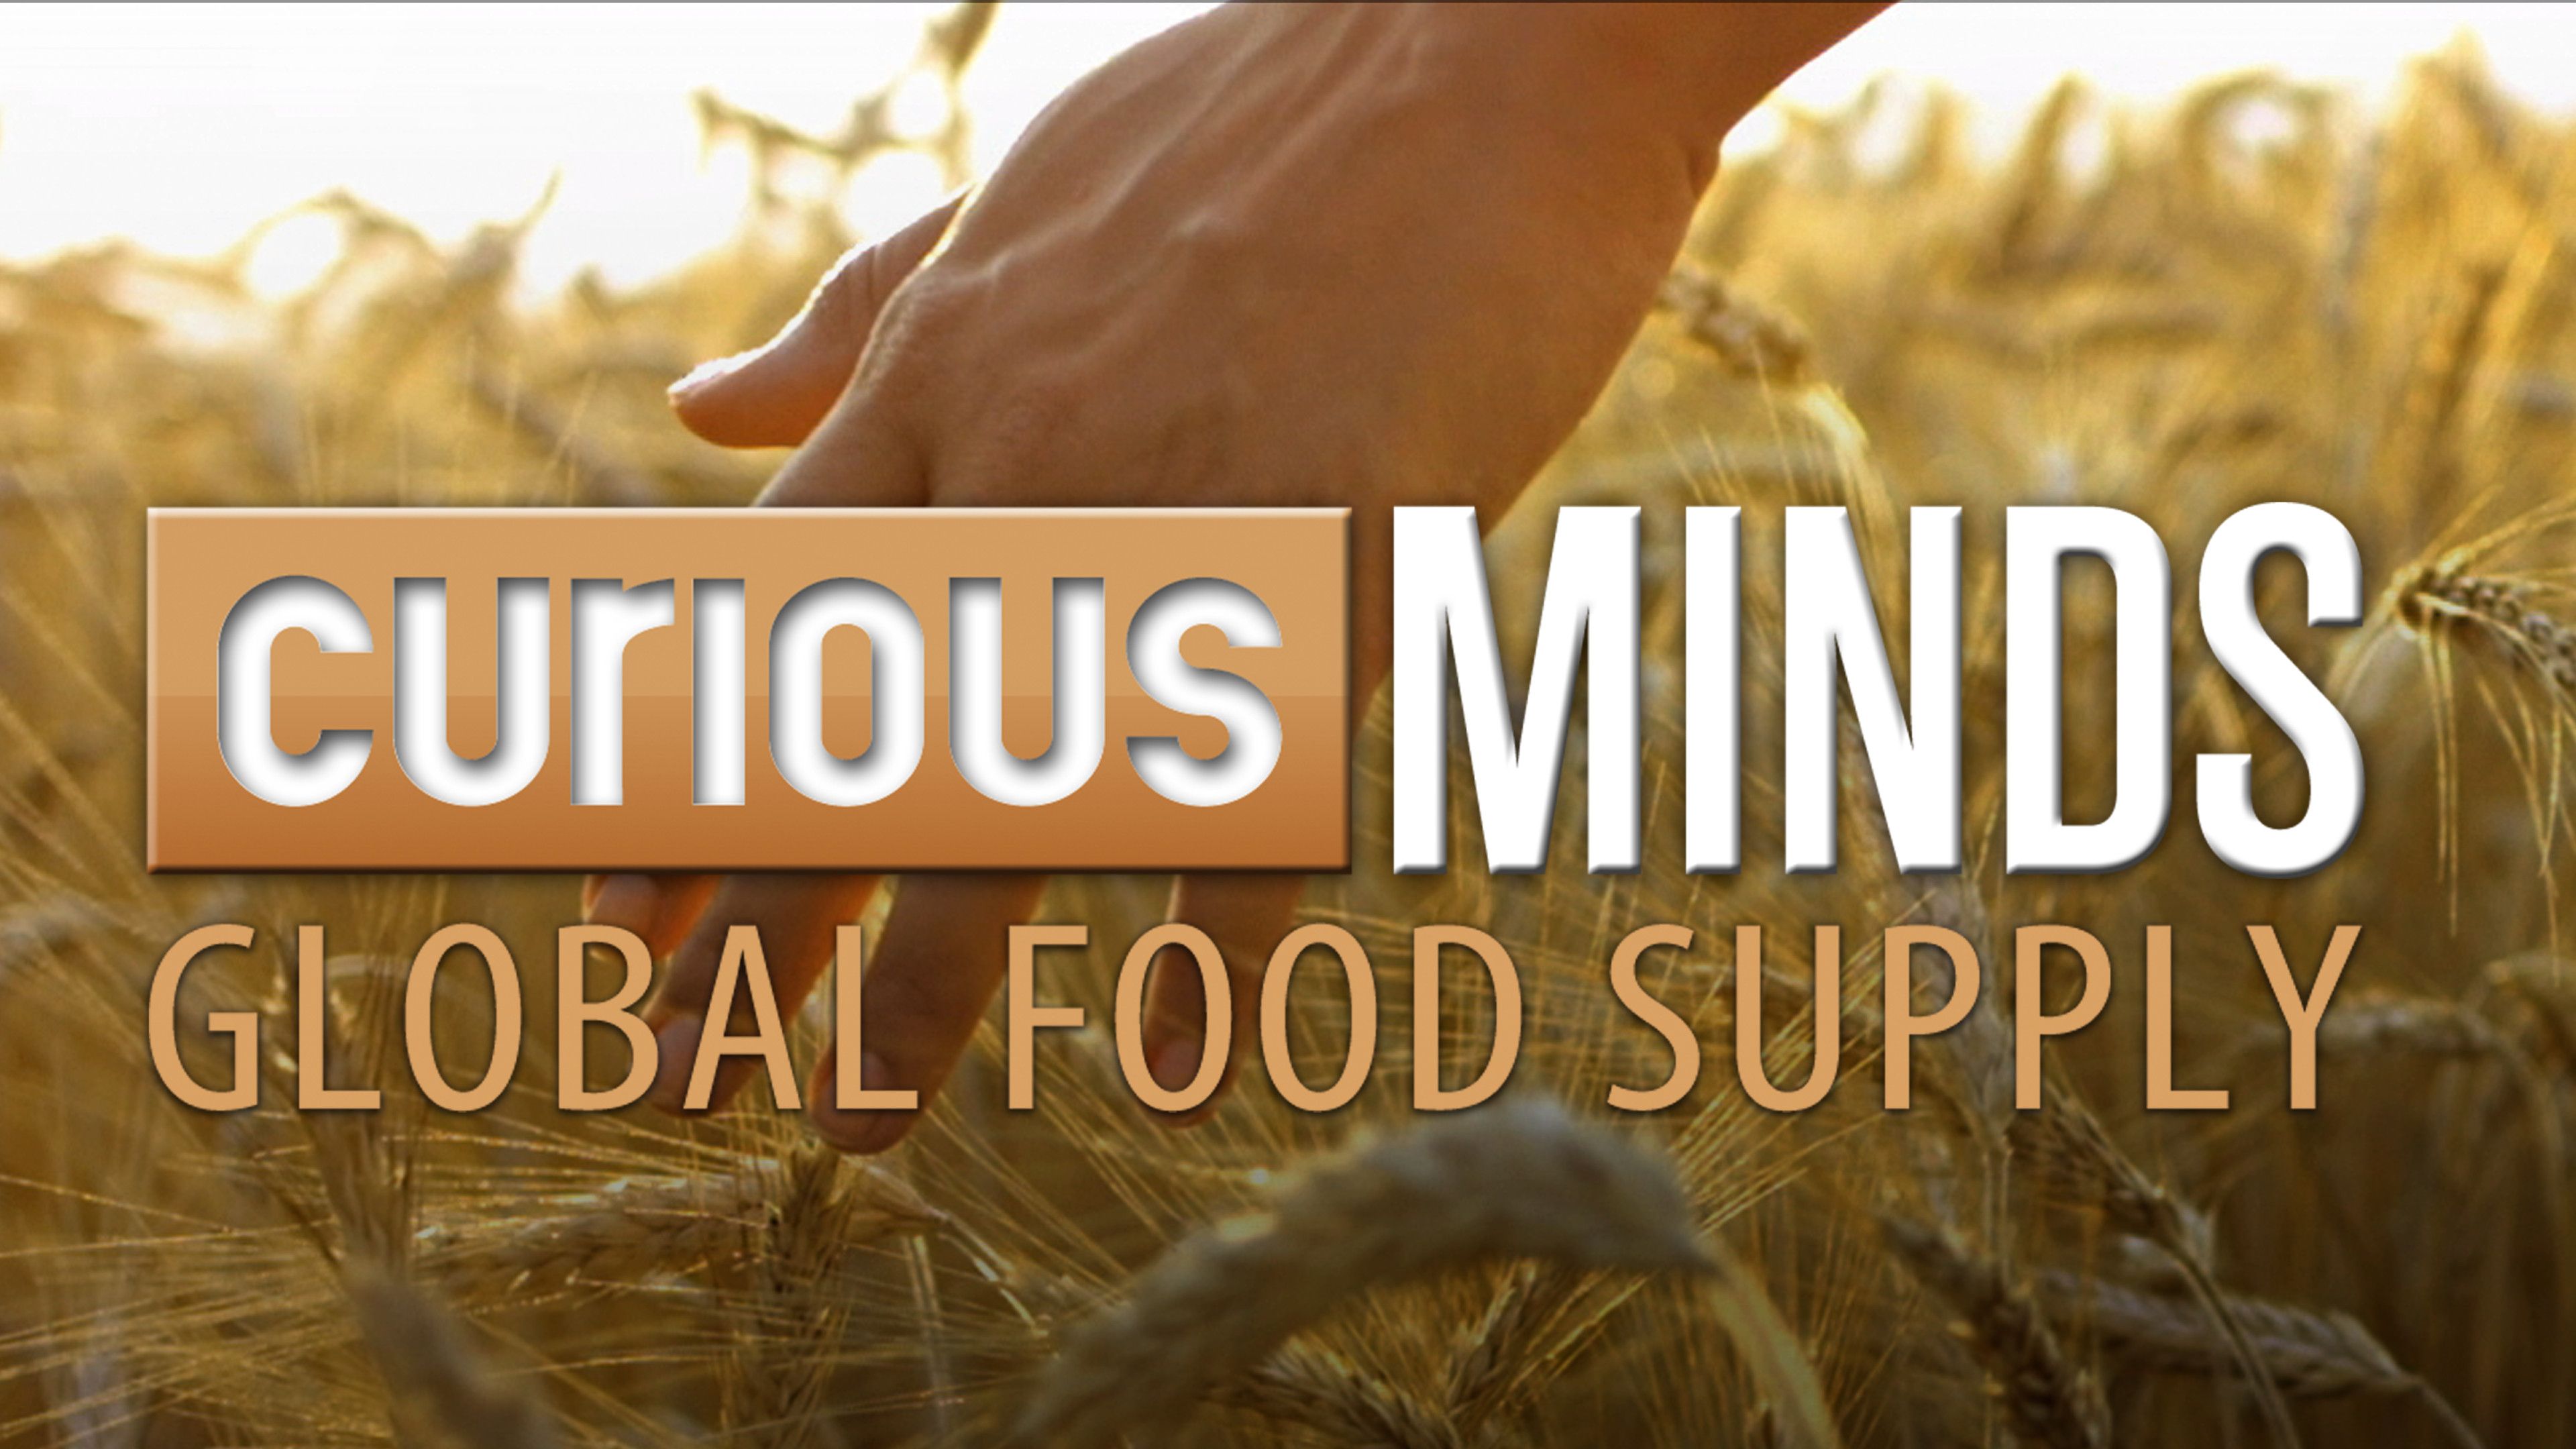 Curious Minds: Global Food Supply